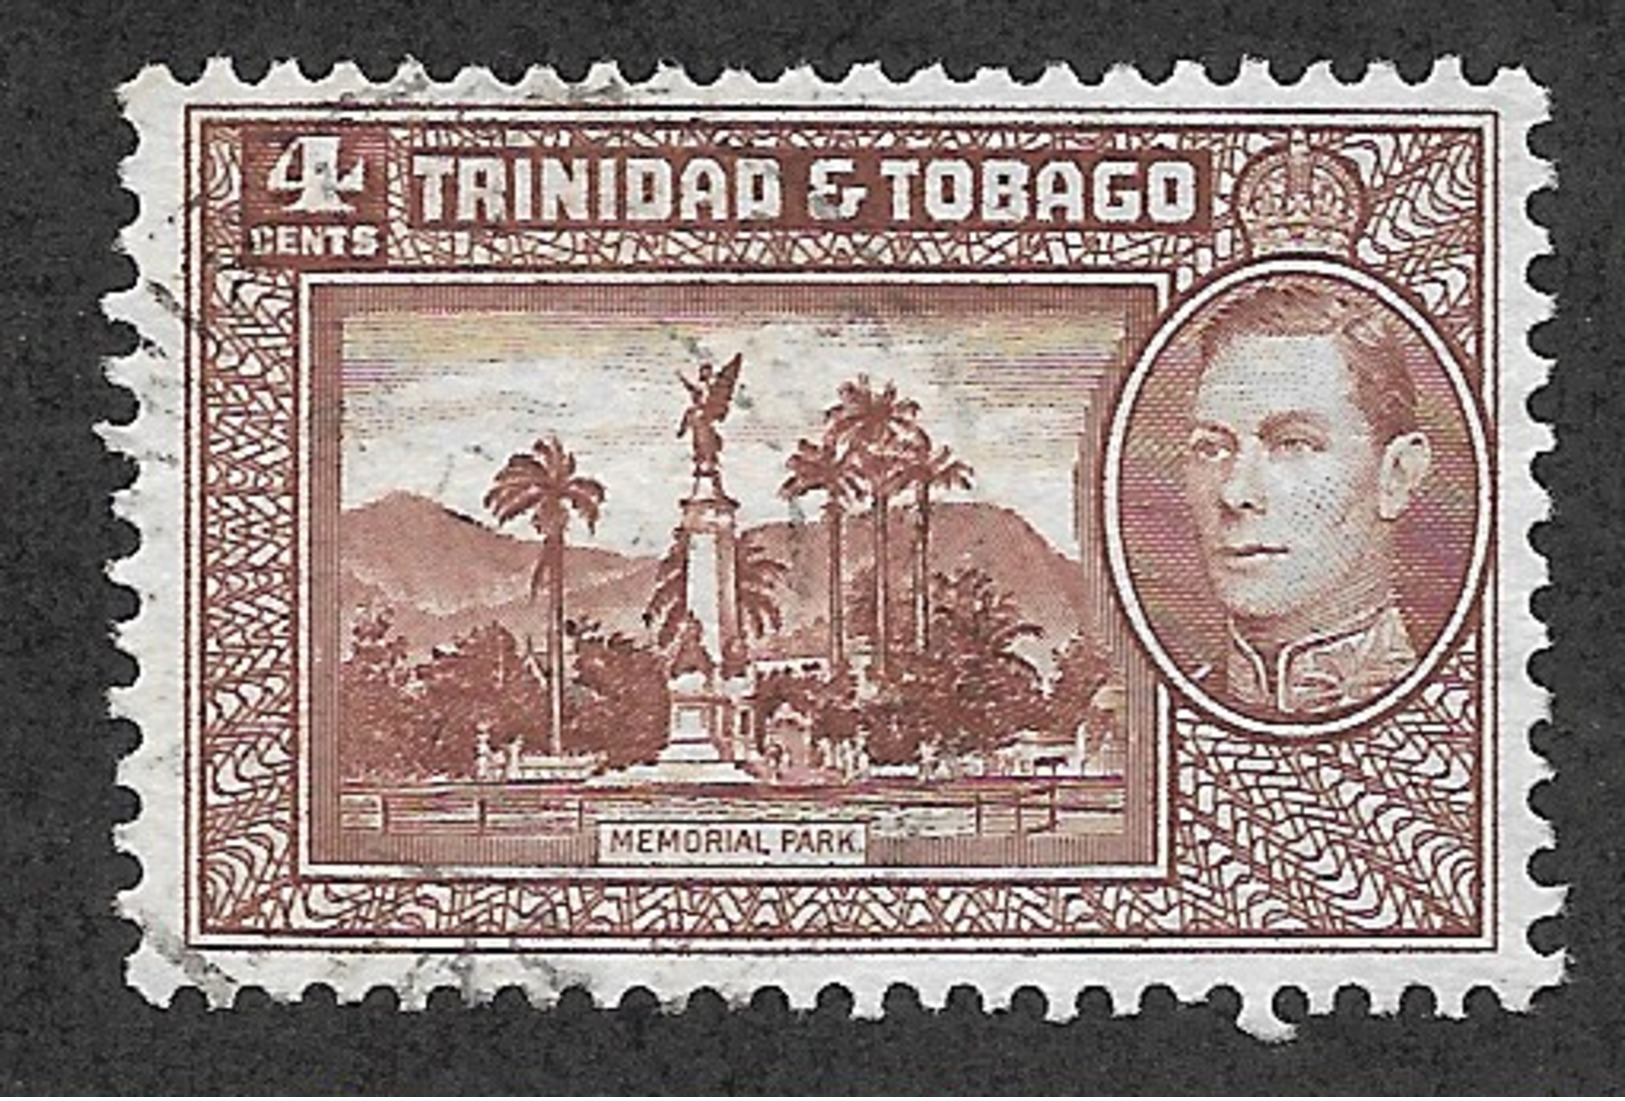 Trinidad & Tobago,  Scott 2018 # 53,  Issued 1938  Single,  Used,  Cat $ 3.25 - Trinidad & Tobago (...-1961)